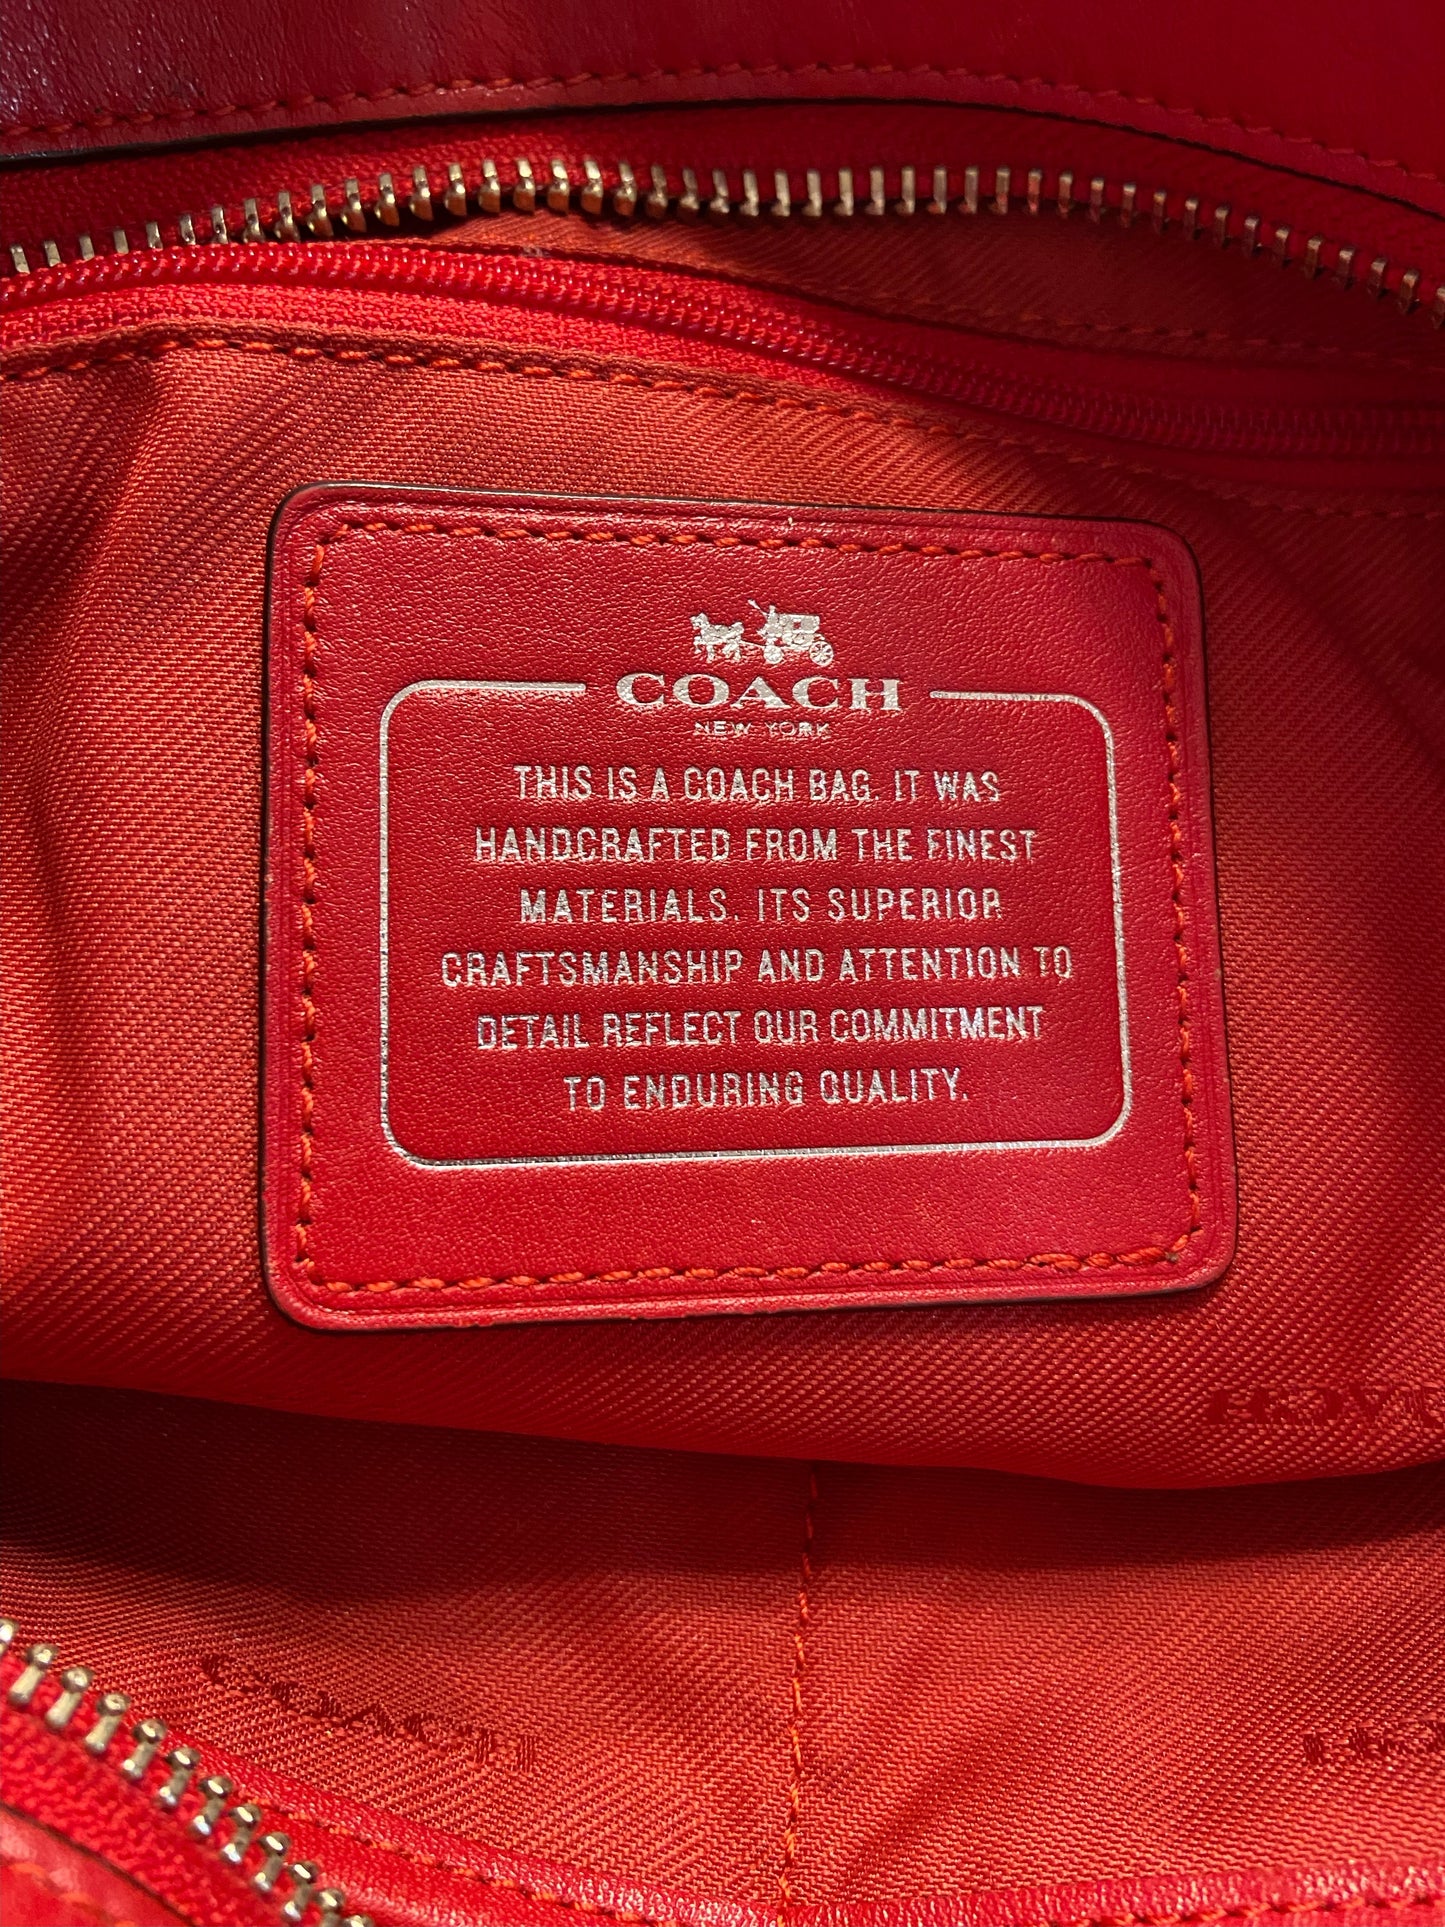 Coach Signature Shoulder Bag - Jacquard Canvas, Brown & Red, 45242/45140